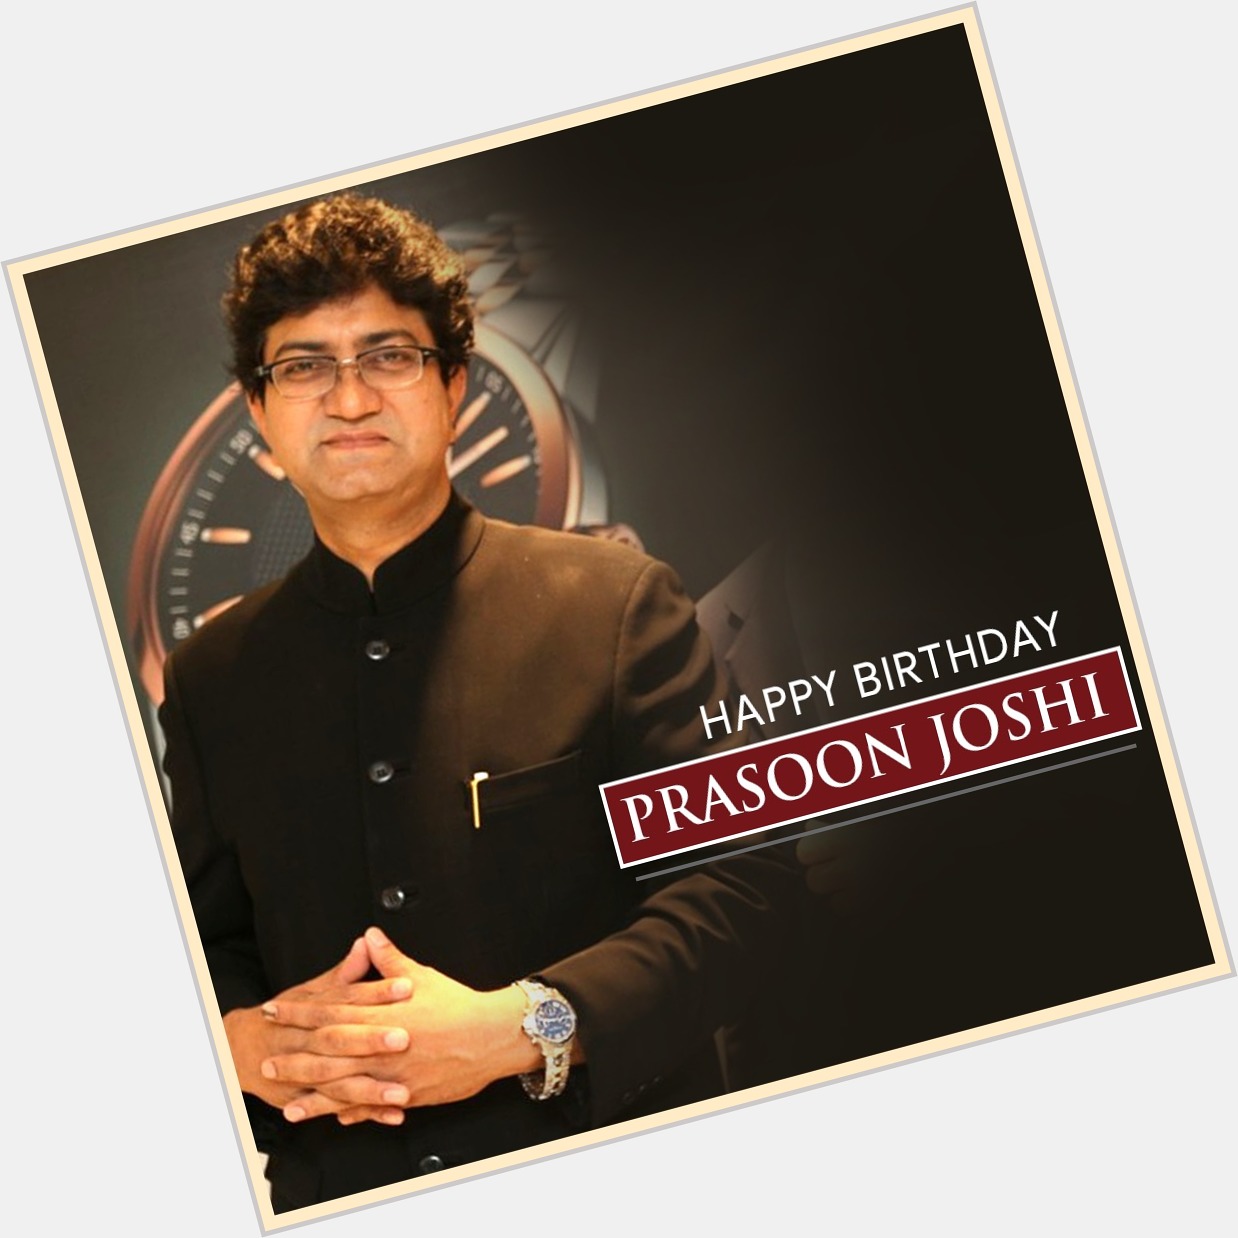 Happy birthday prasoon joshi sir. You are the best their is no doubt keep working HappyBirthday PrasoonJoshi 